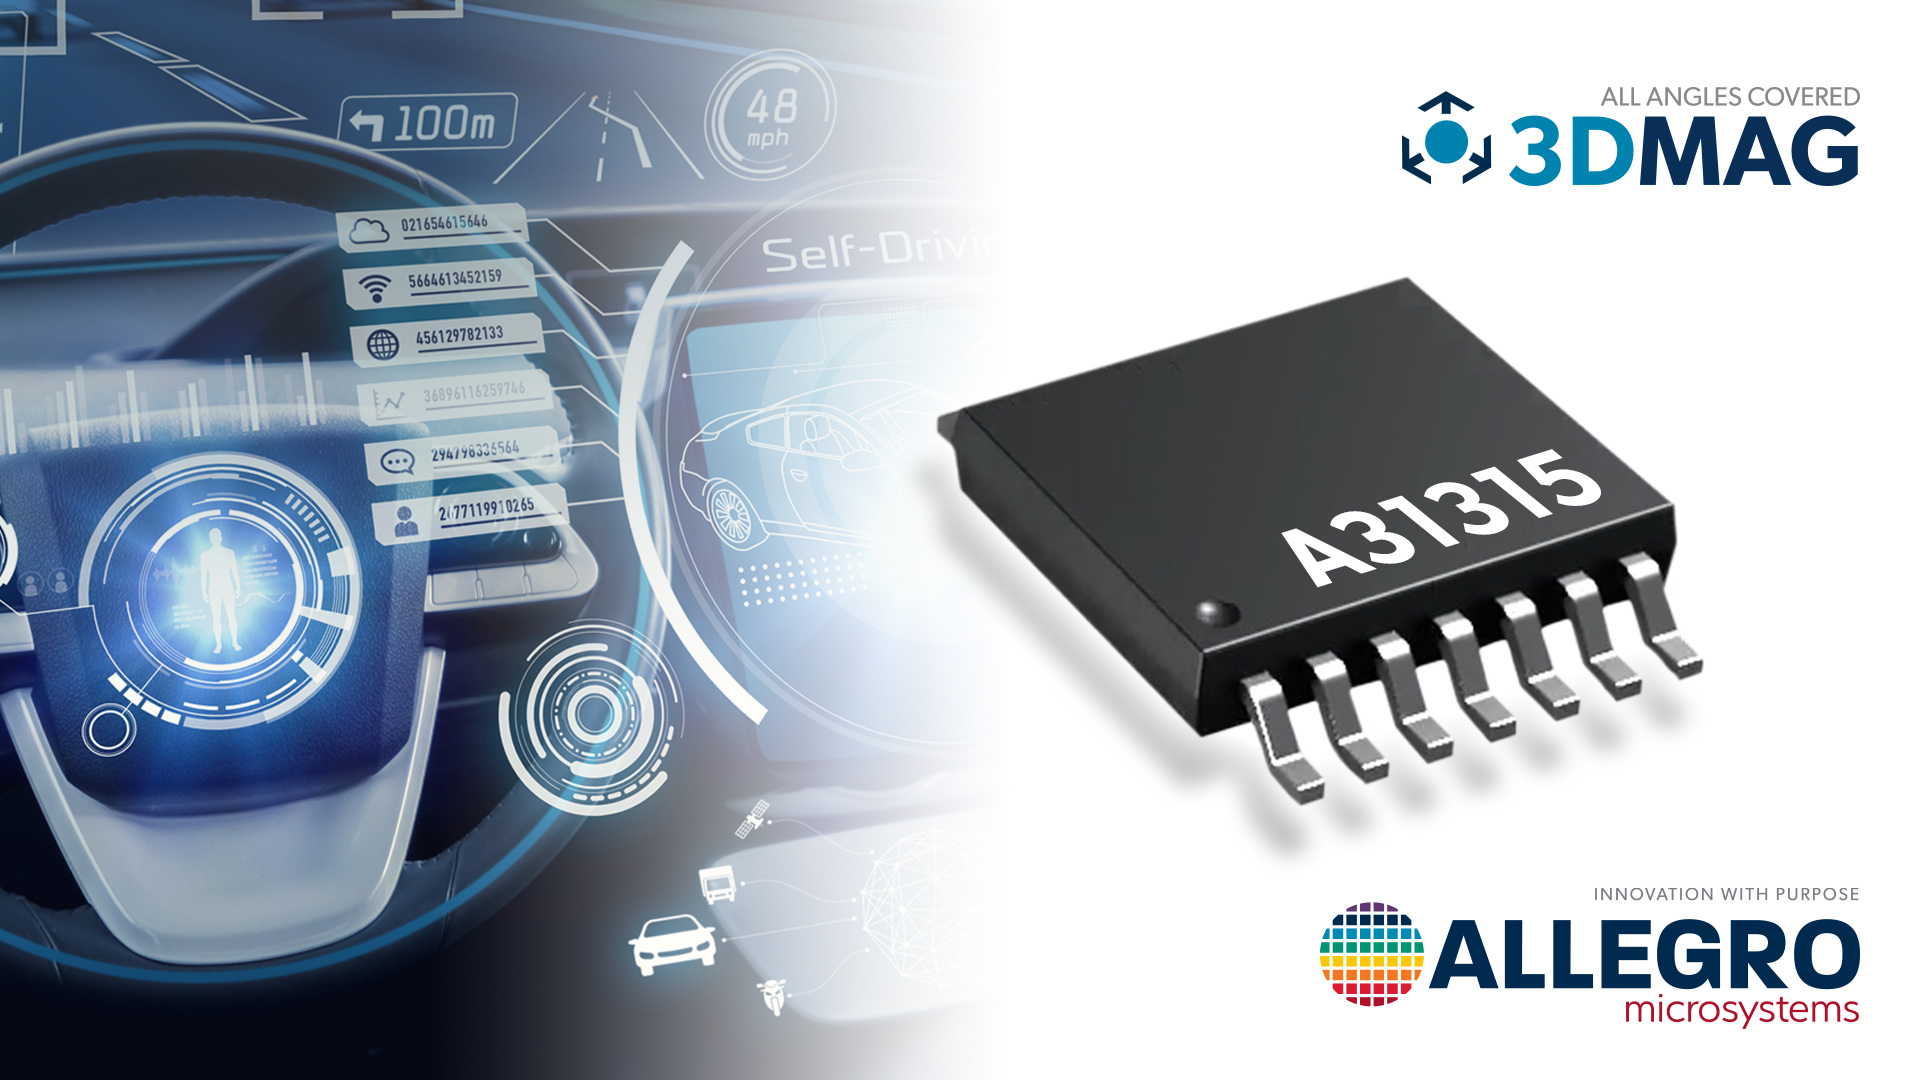 Allegro's A31315 3DMAG position sensor enables next-generation ADAS applications.